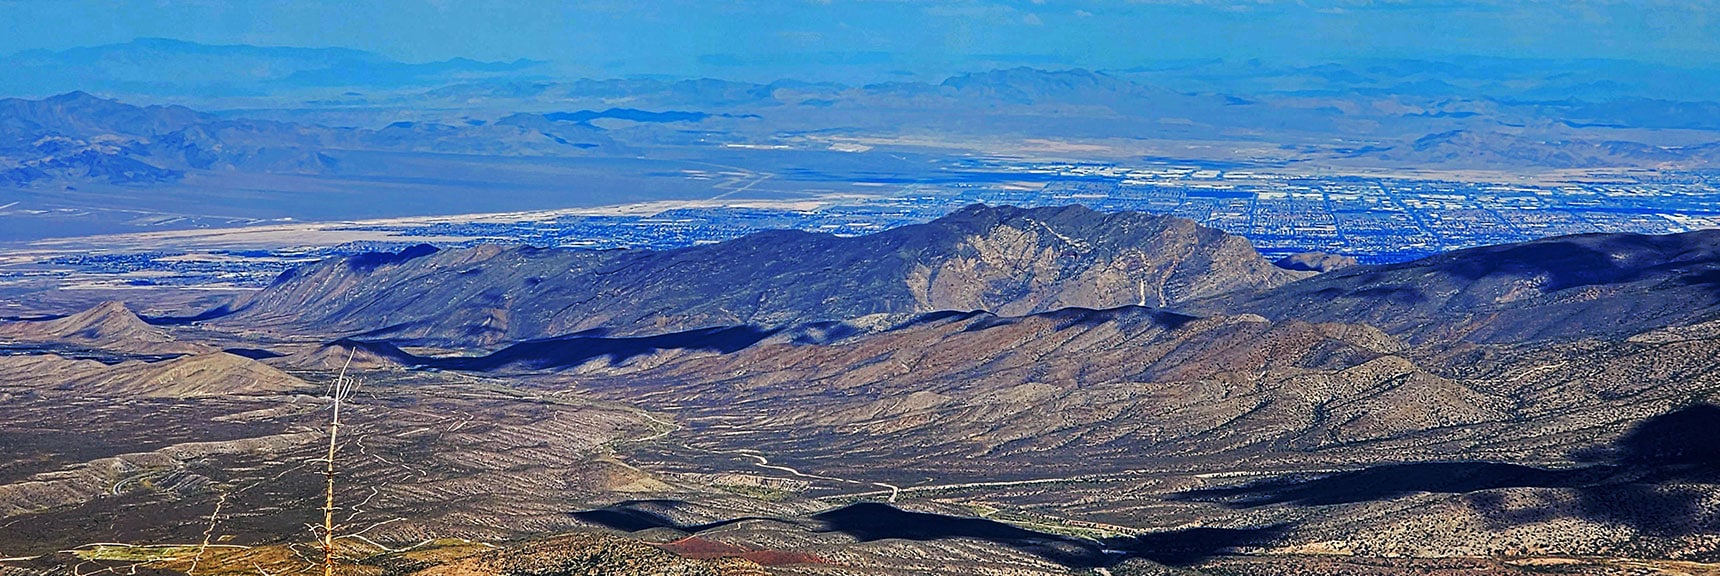 Las Vegas Valley Behind Skye Canyon Ridge | Harris Mountain Triangle | Mt Charleston Wilderness, Nevada